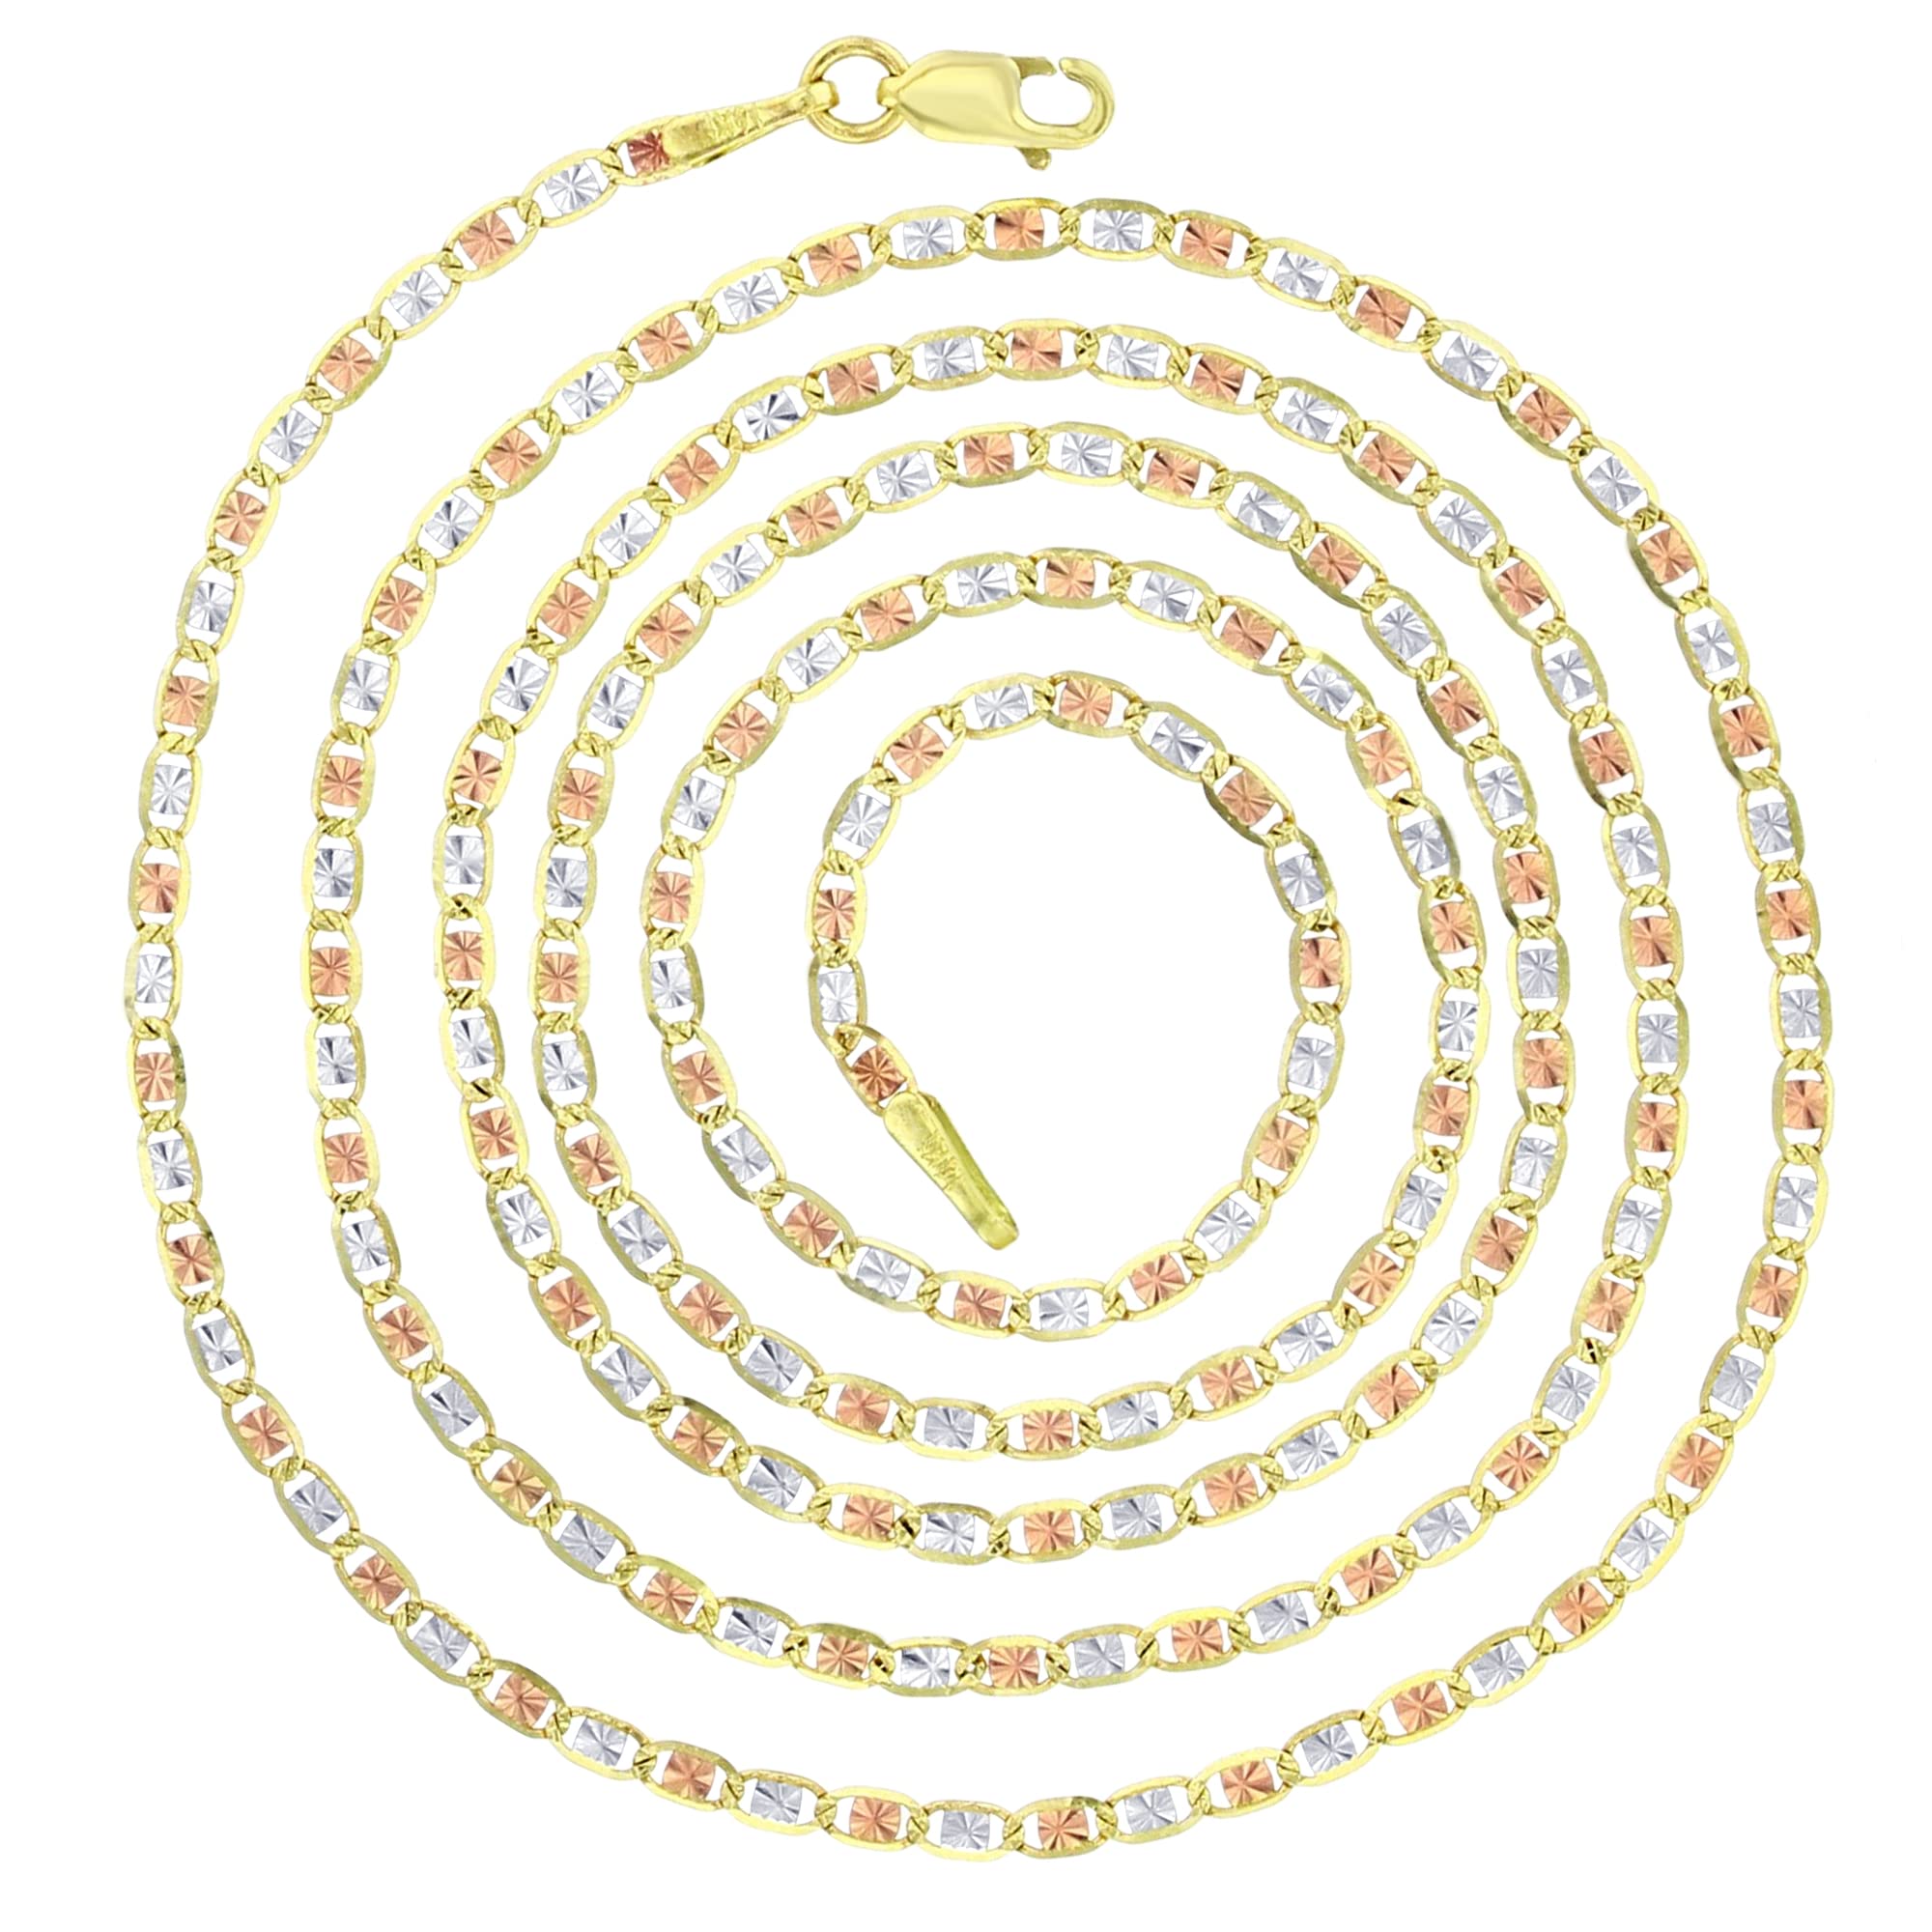 Solid 14K Gold Tricolor 2mm-8mm Diamond Cut Star Italian or Heart Italian Love Chain Necklace